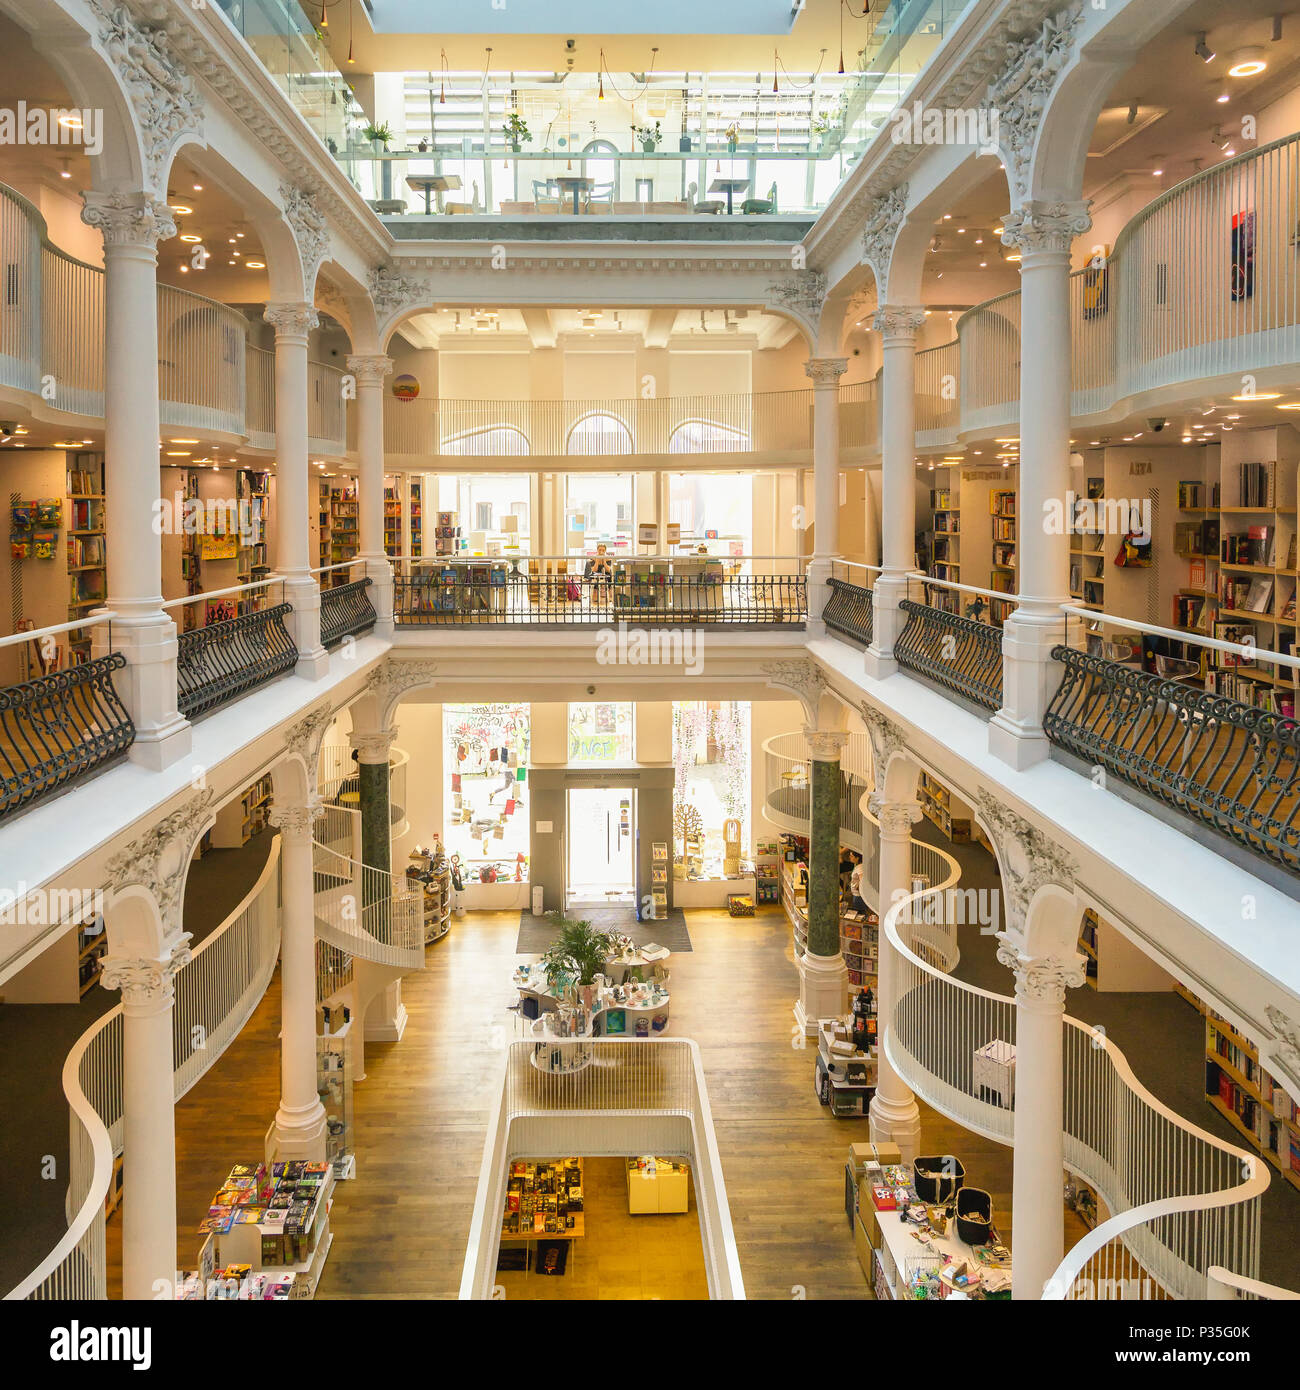 Bucharest, Romania - June 12, 2018: Interior of the Carturesti Carusel  bookshop, located in the old city center Lipscani - Buacharest Stock Photo  - Alamy